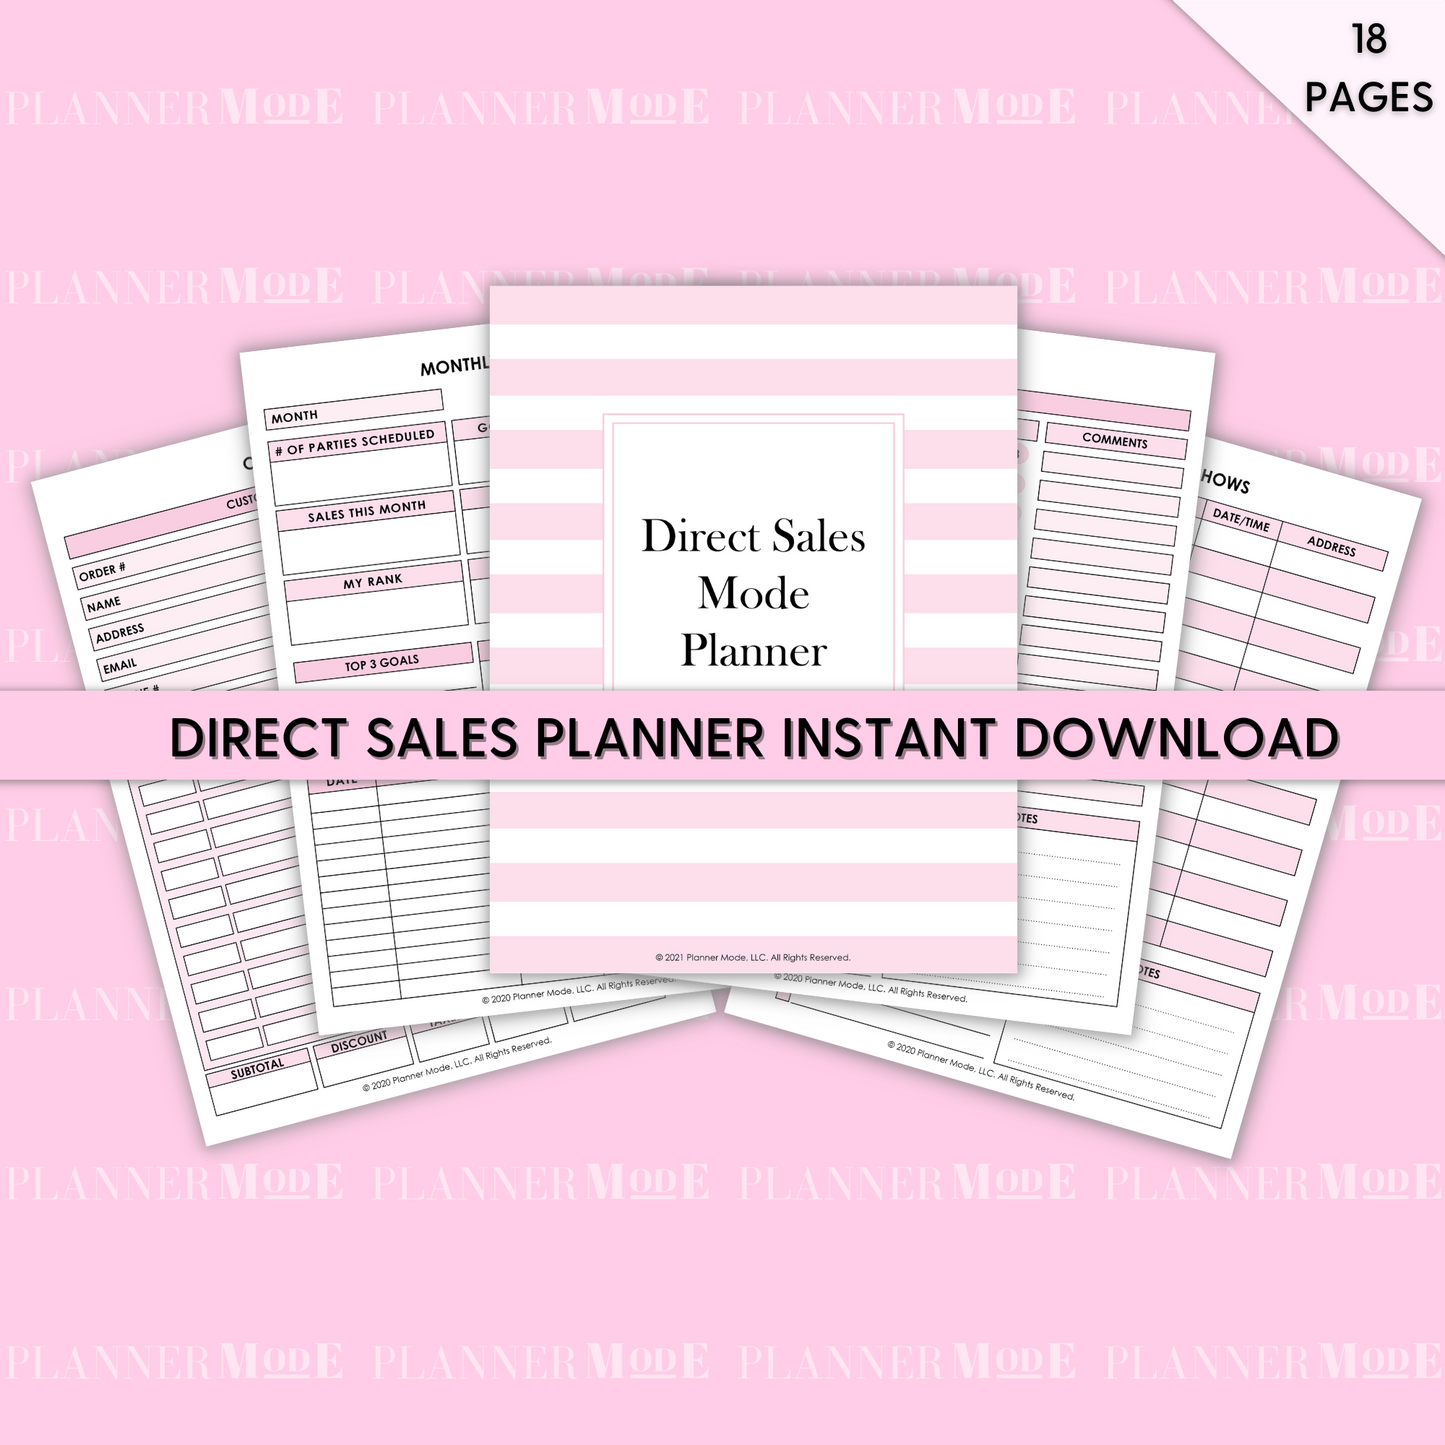 Direct Sales Planner